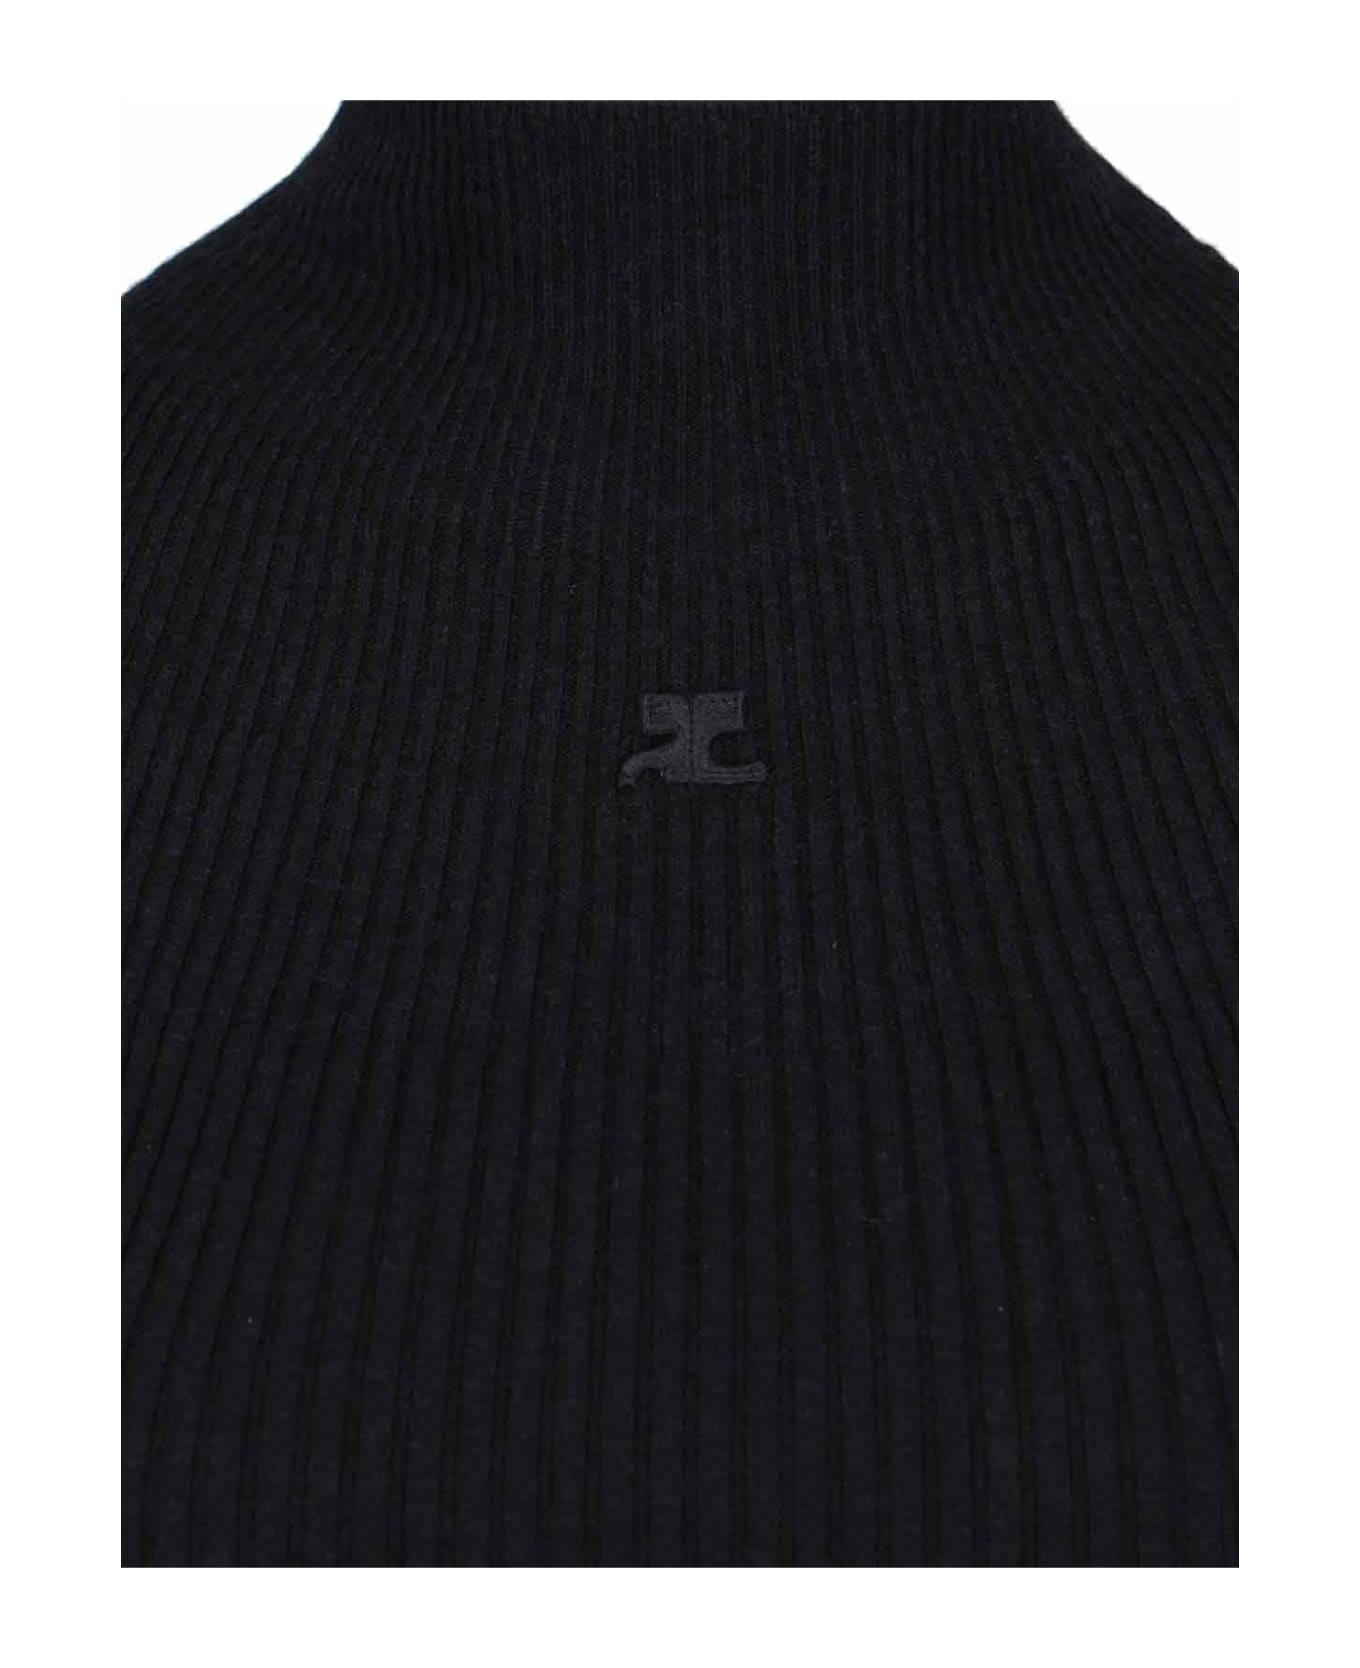 Courrèges Ribbed Turtleneck Sweater - Black  